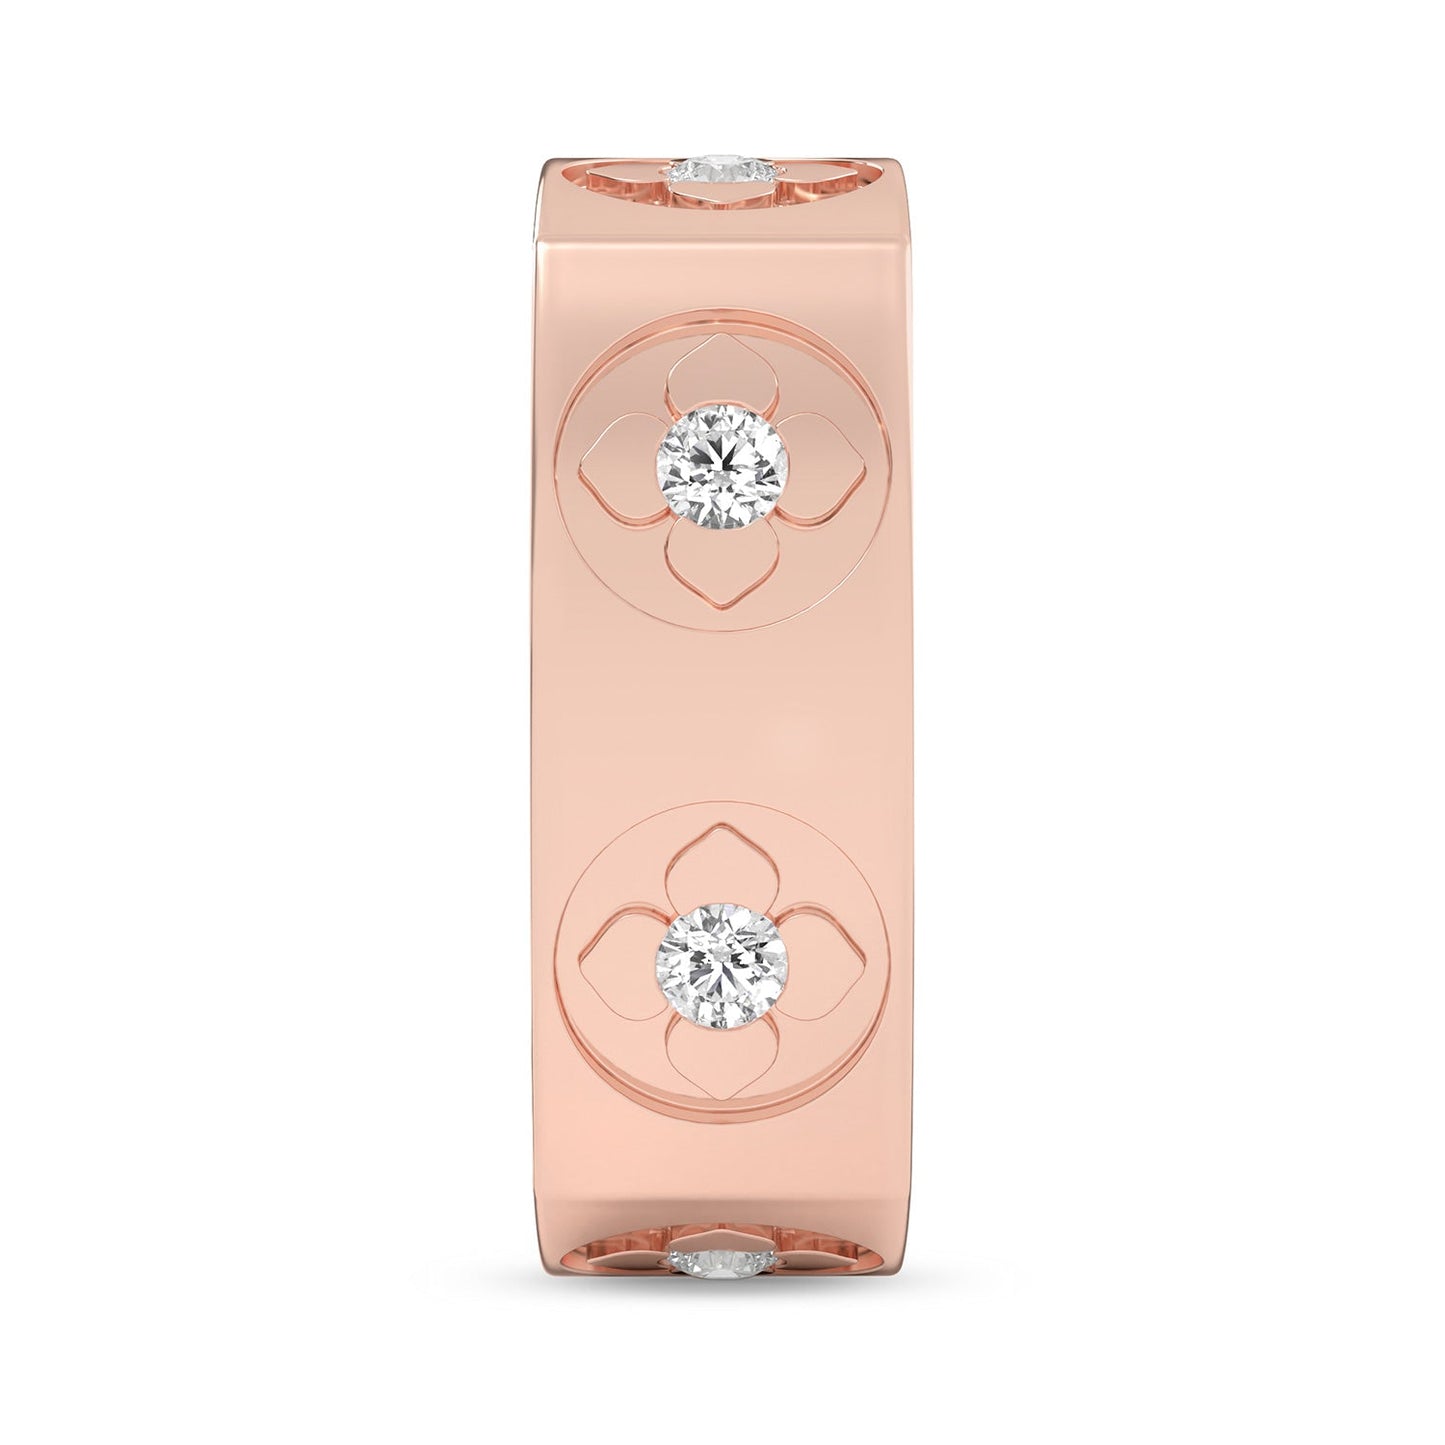 La Fleur 6.10mm 6-Diamonds Square Band_Product Angle_1/3 - 2